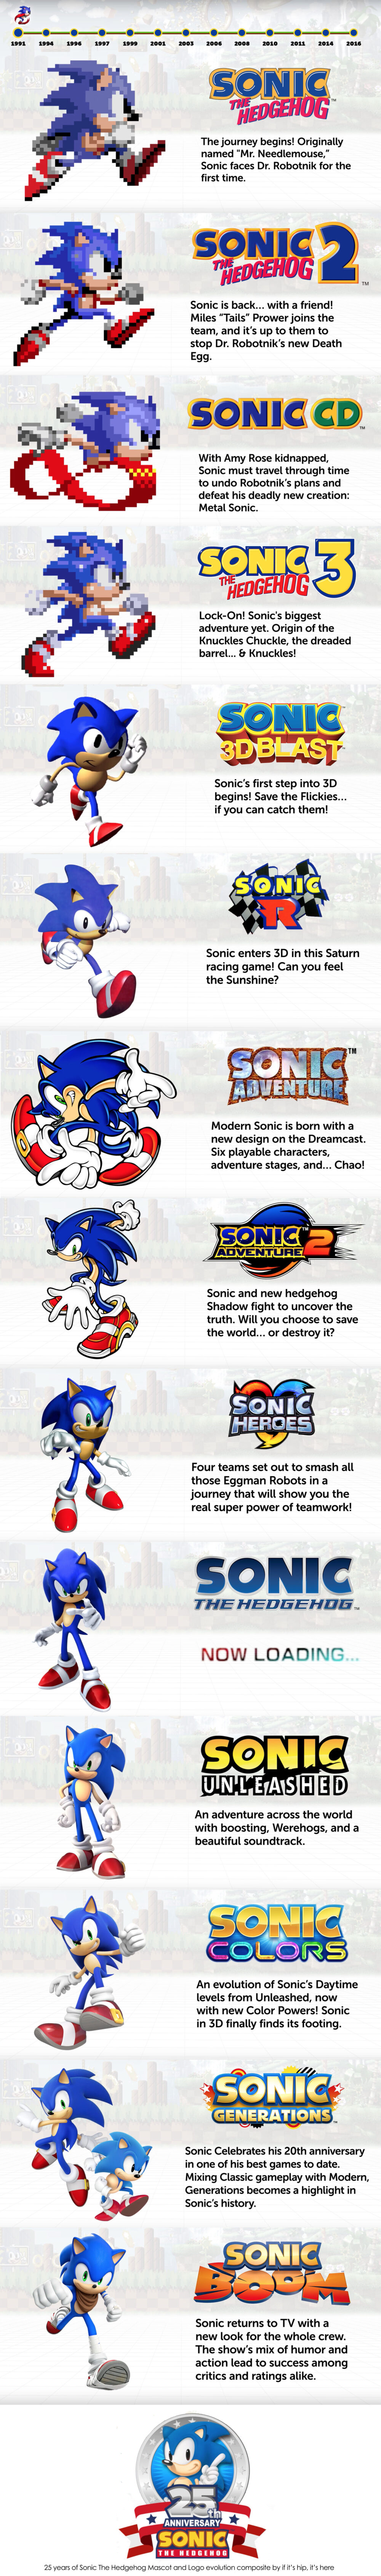 25 years of SEGA Sonic